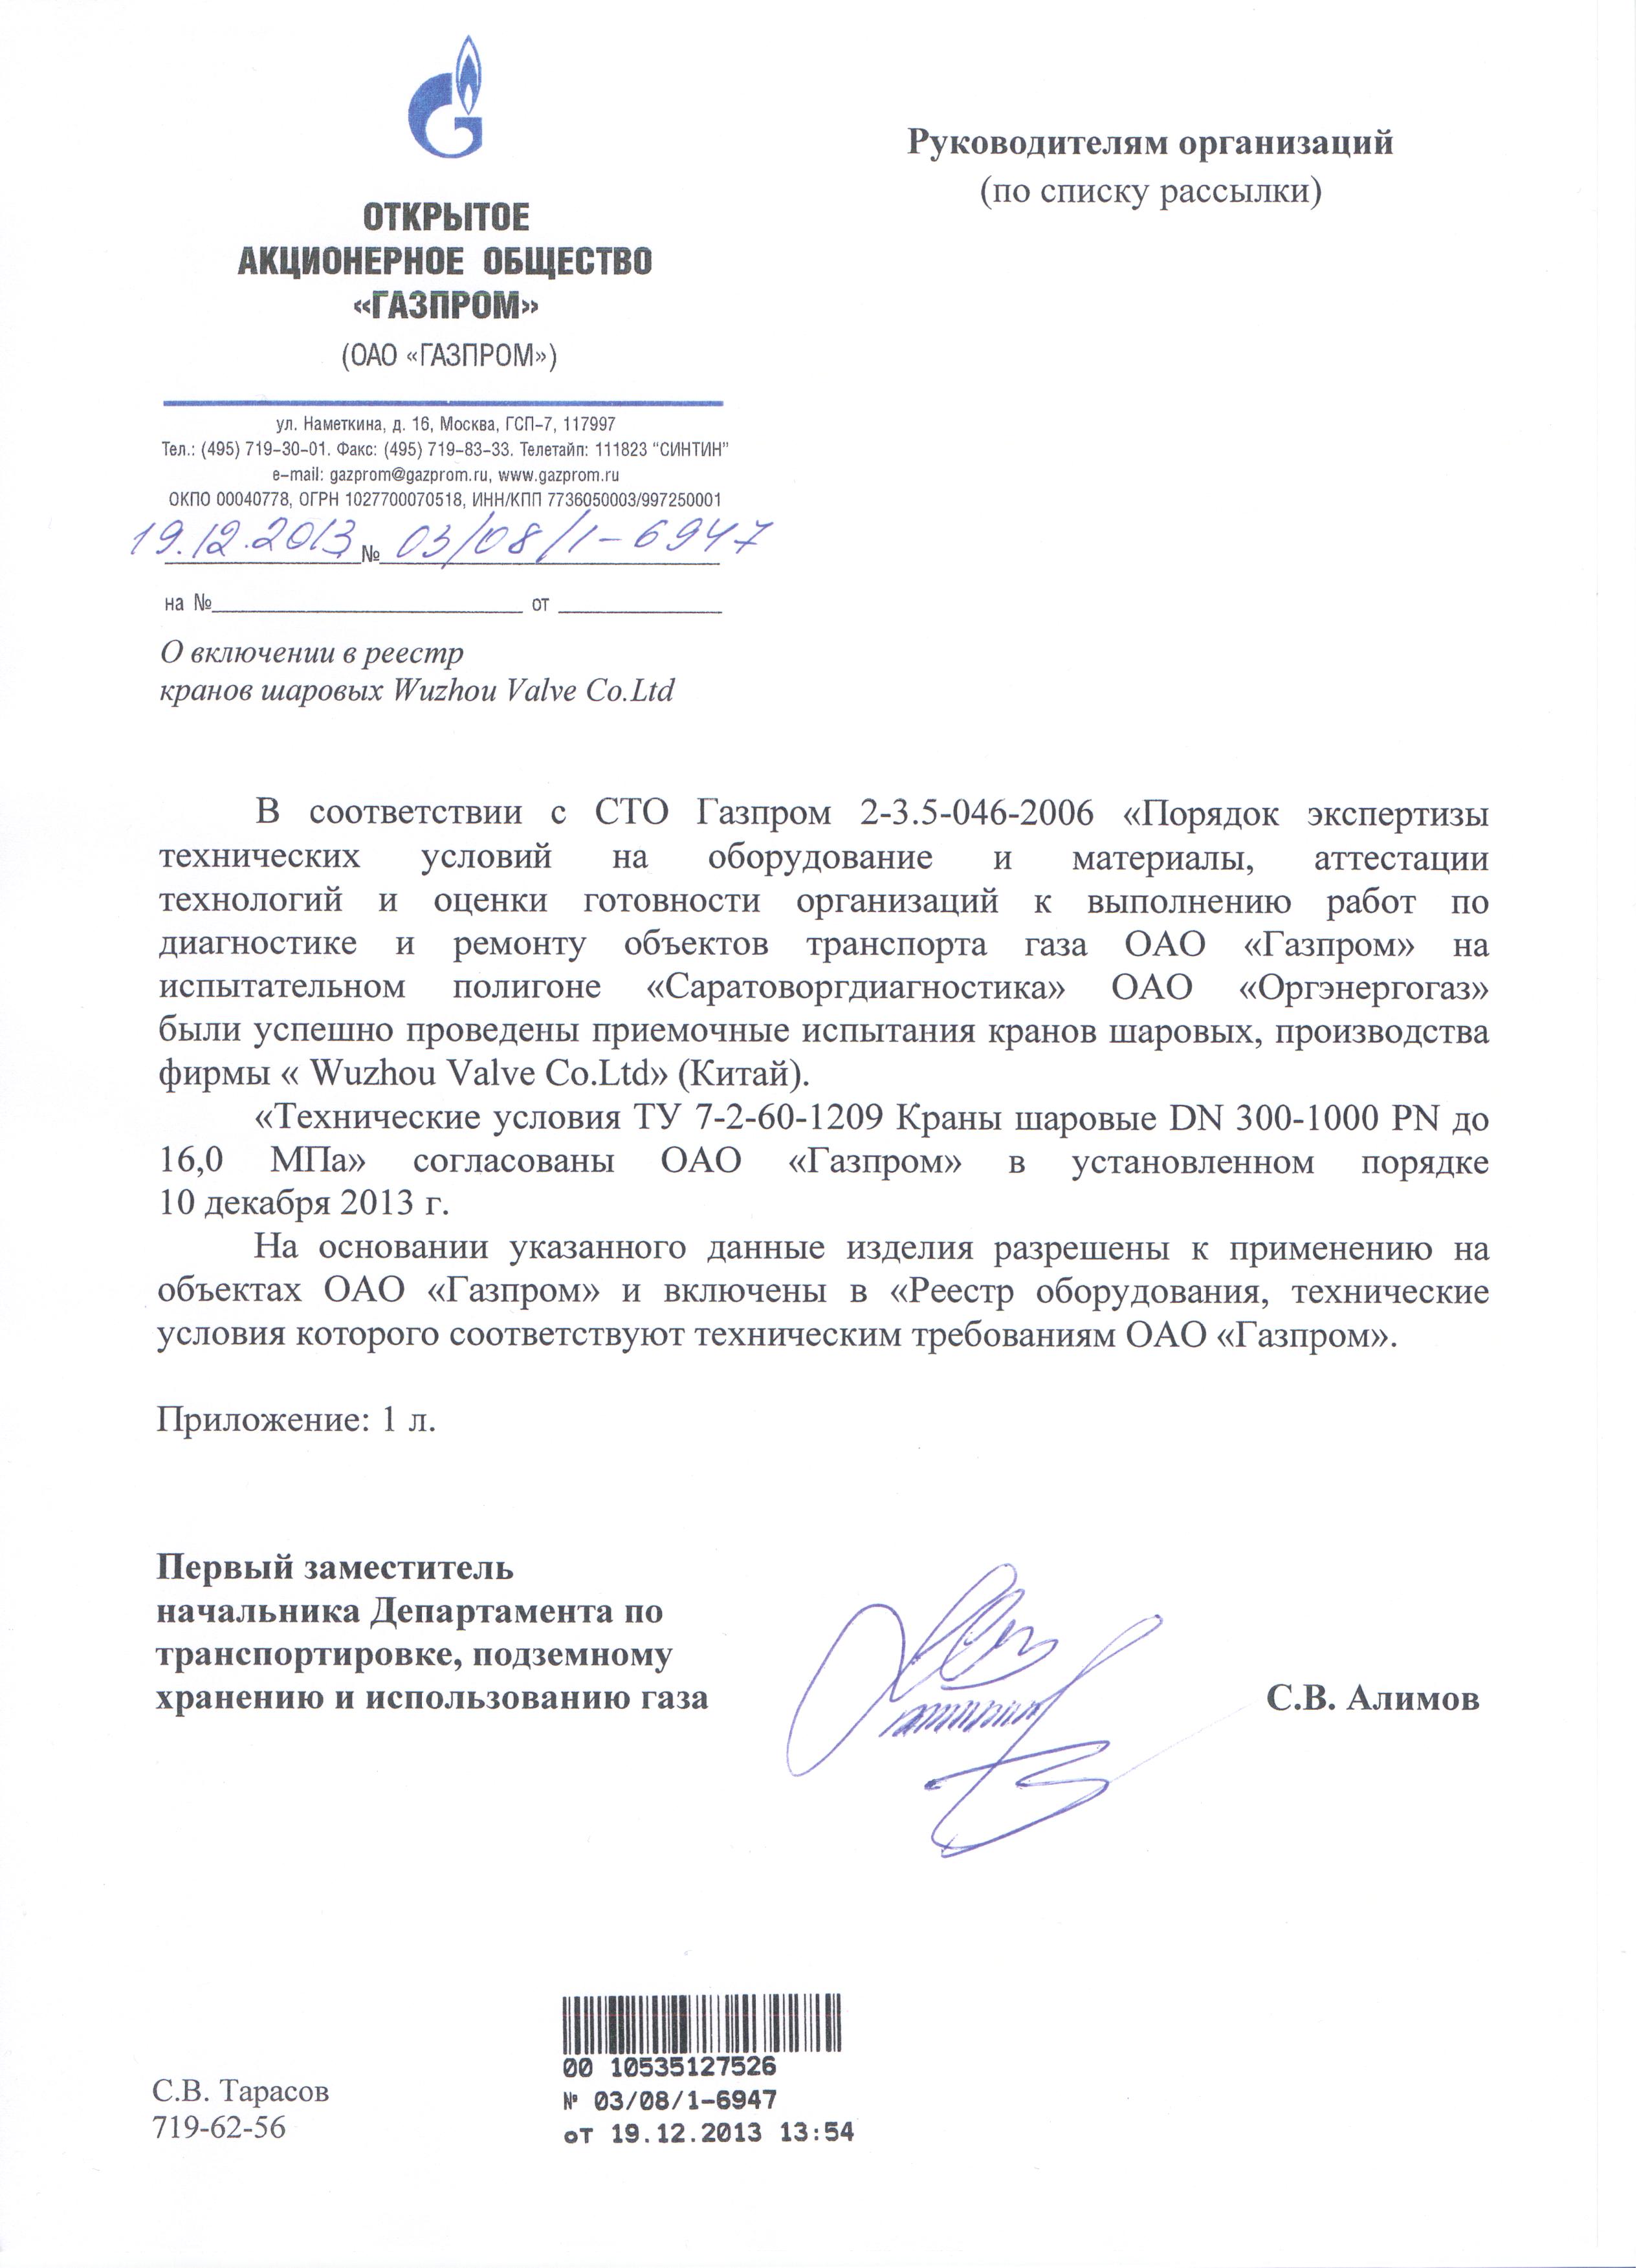 Gazprom Approval letter